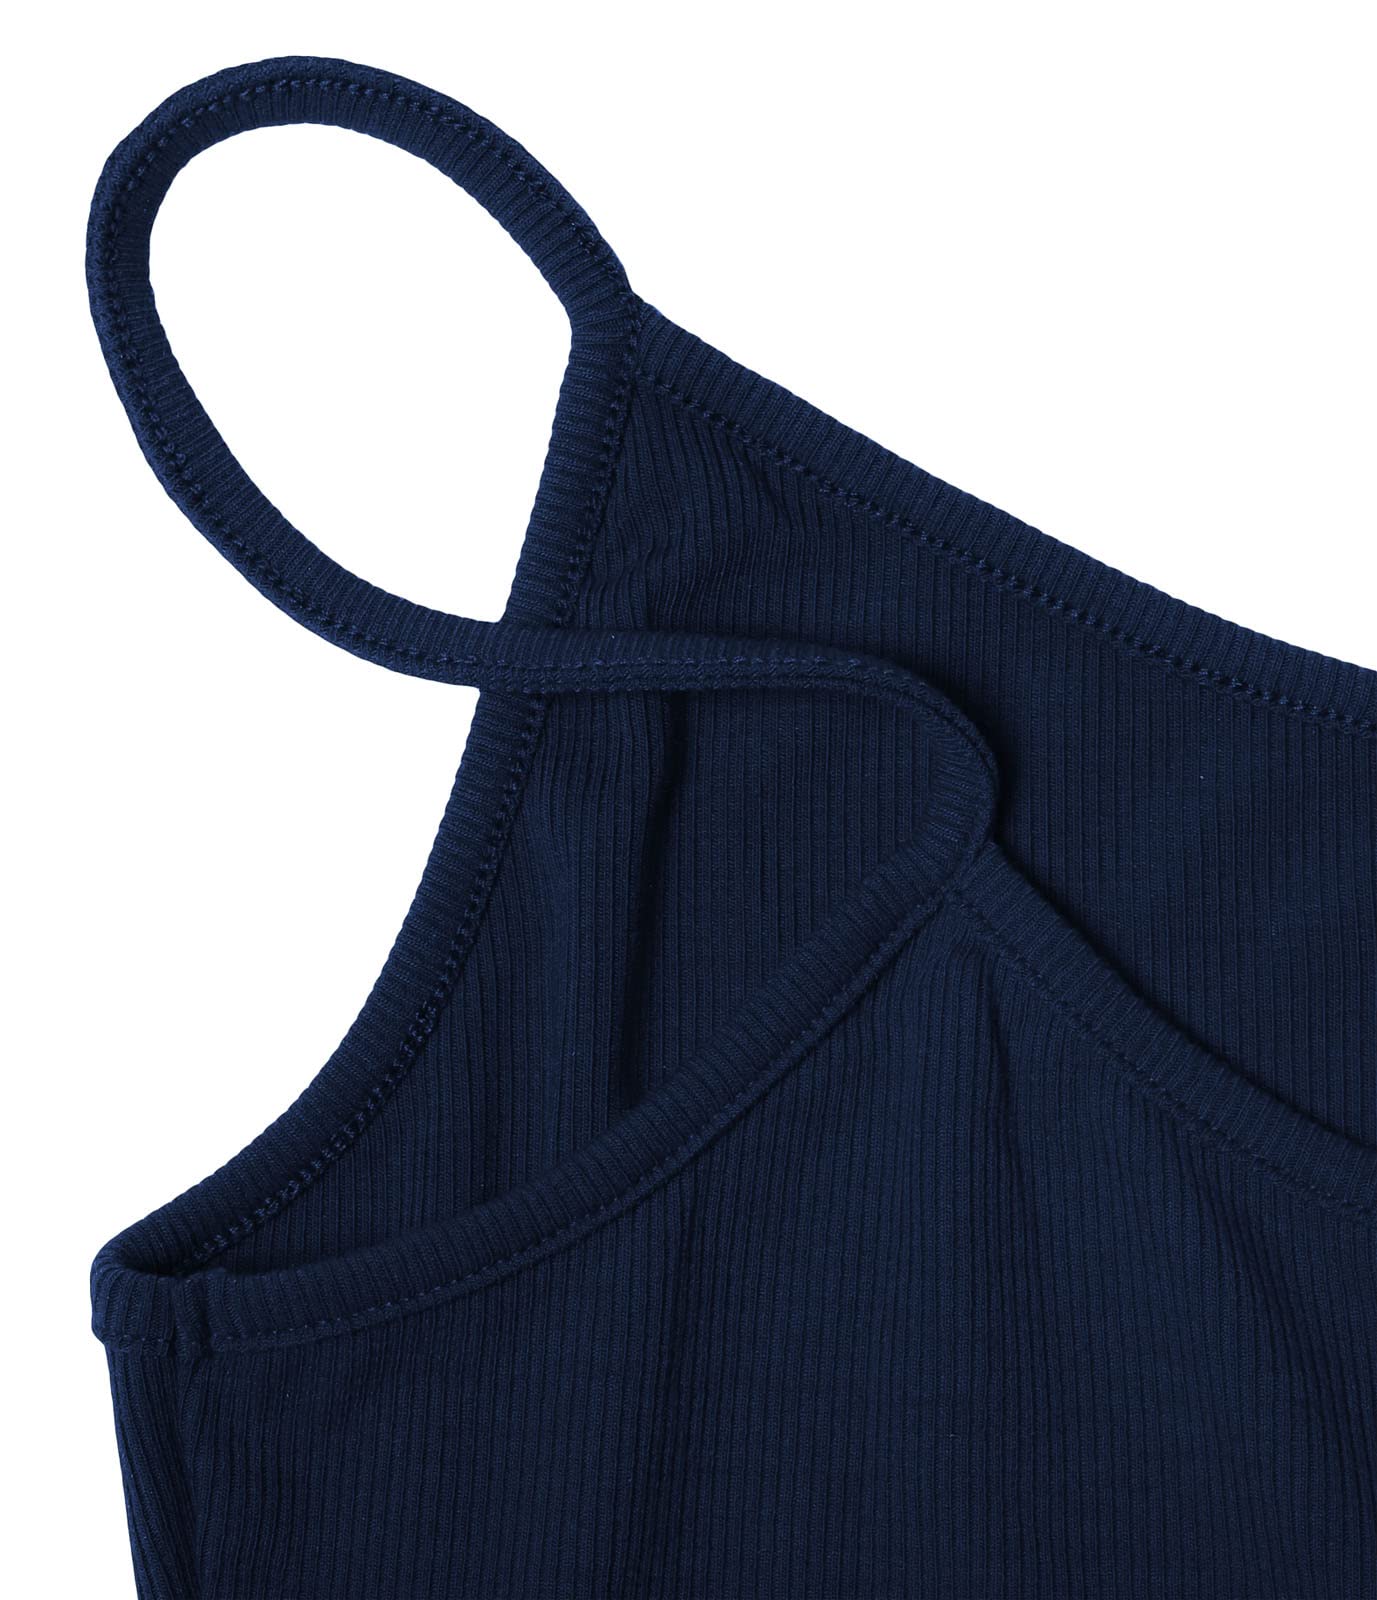 PrinStory Women's Summer Casual Cami Top Tank V Neck Ribbed Knit Elastic Sling Tops